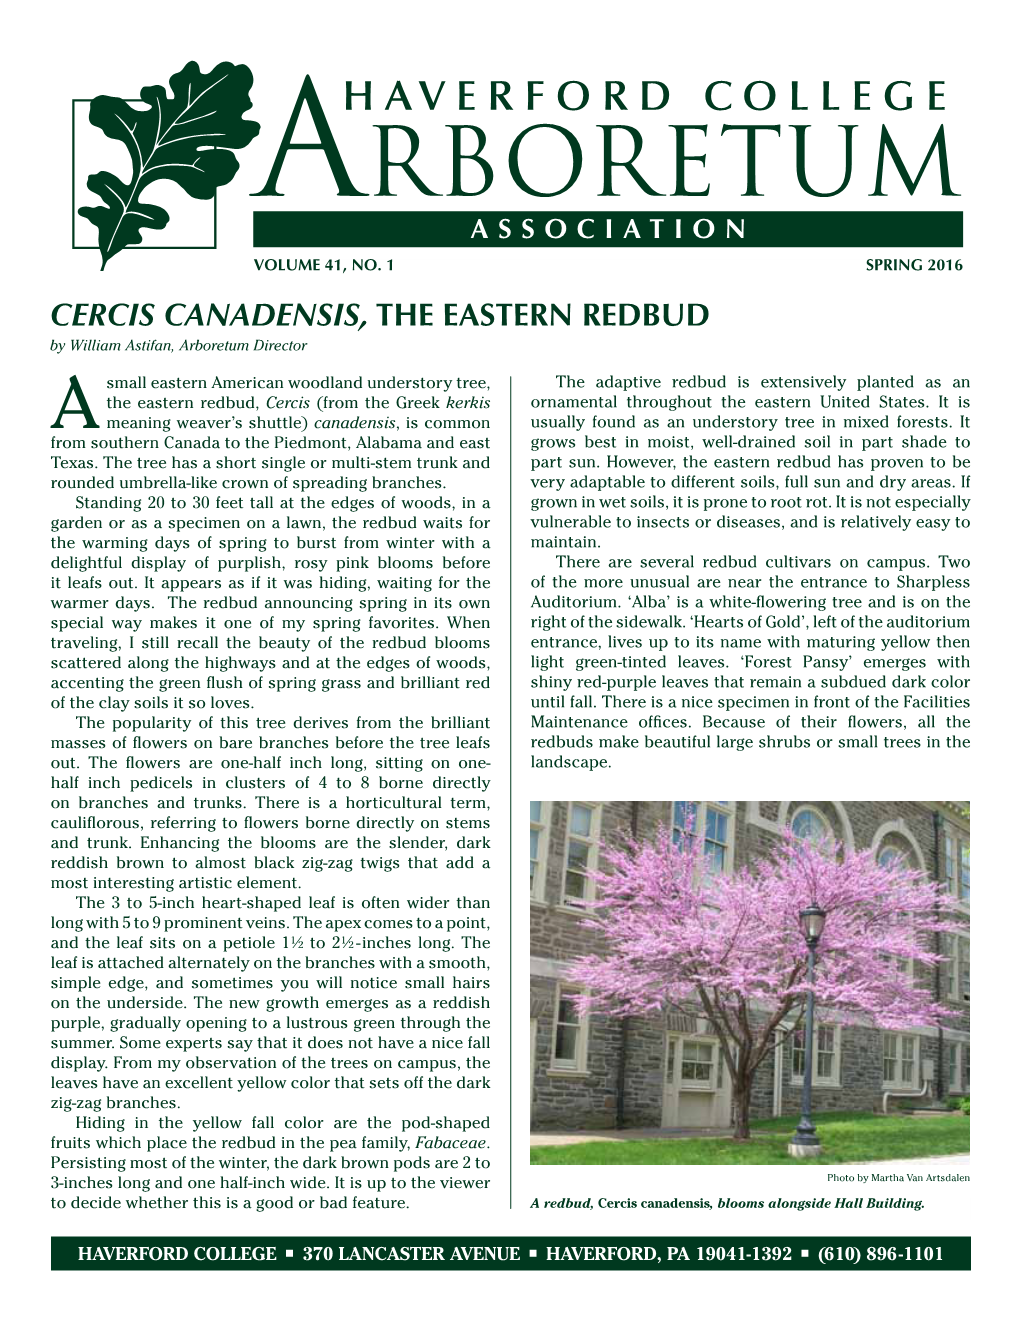 Cercis Canadensis, the Eastern Redbud by William Astifan, Arboretum Director